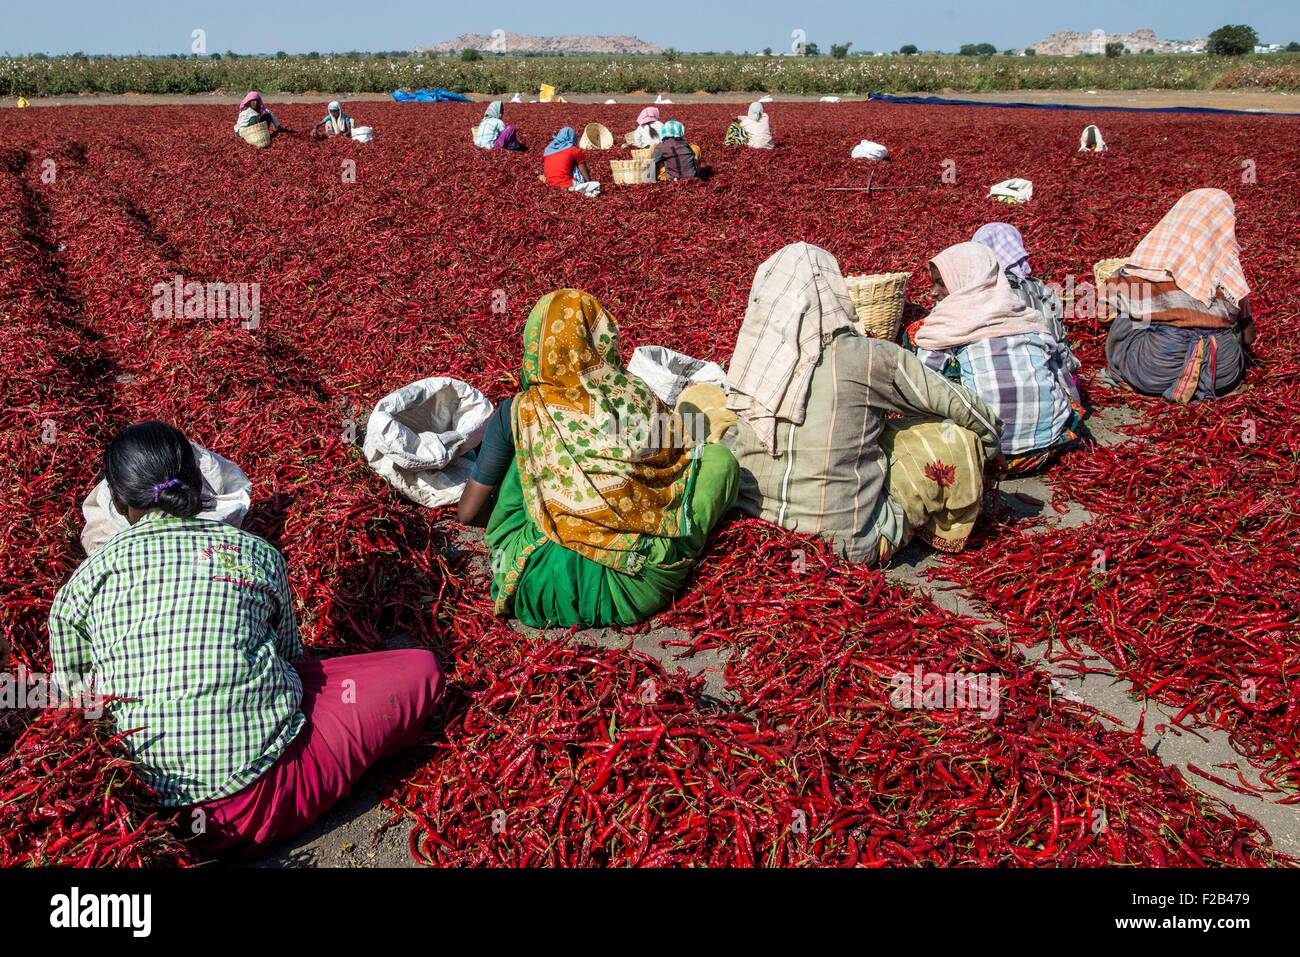 Indian farm workers dry freshly harvest chili peppers June 18, 2015 in Gabbur, district Raichur, Karnataka, India. Stock Photo